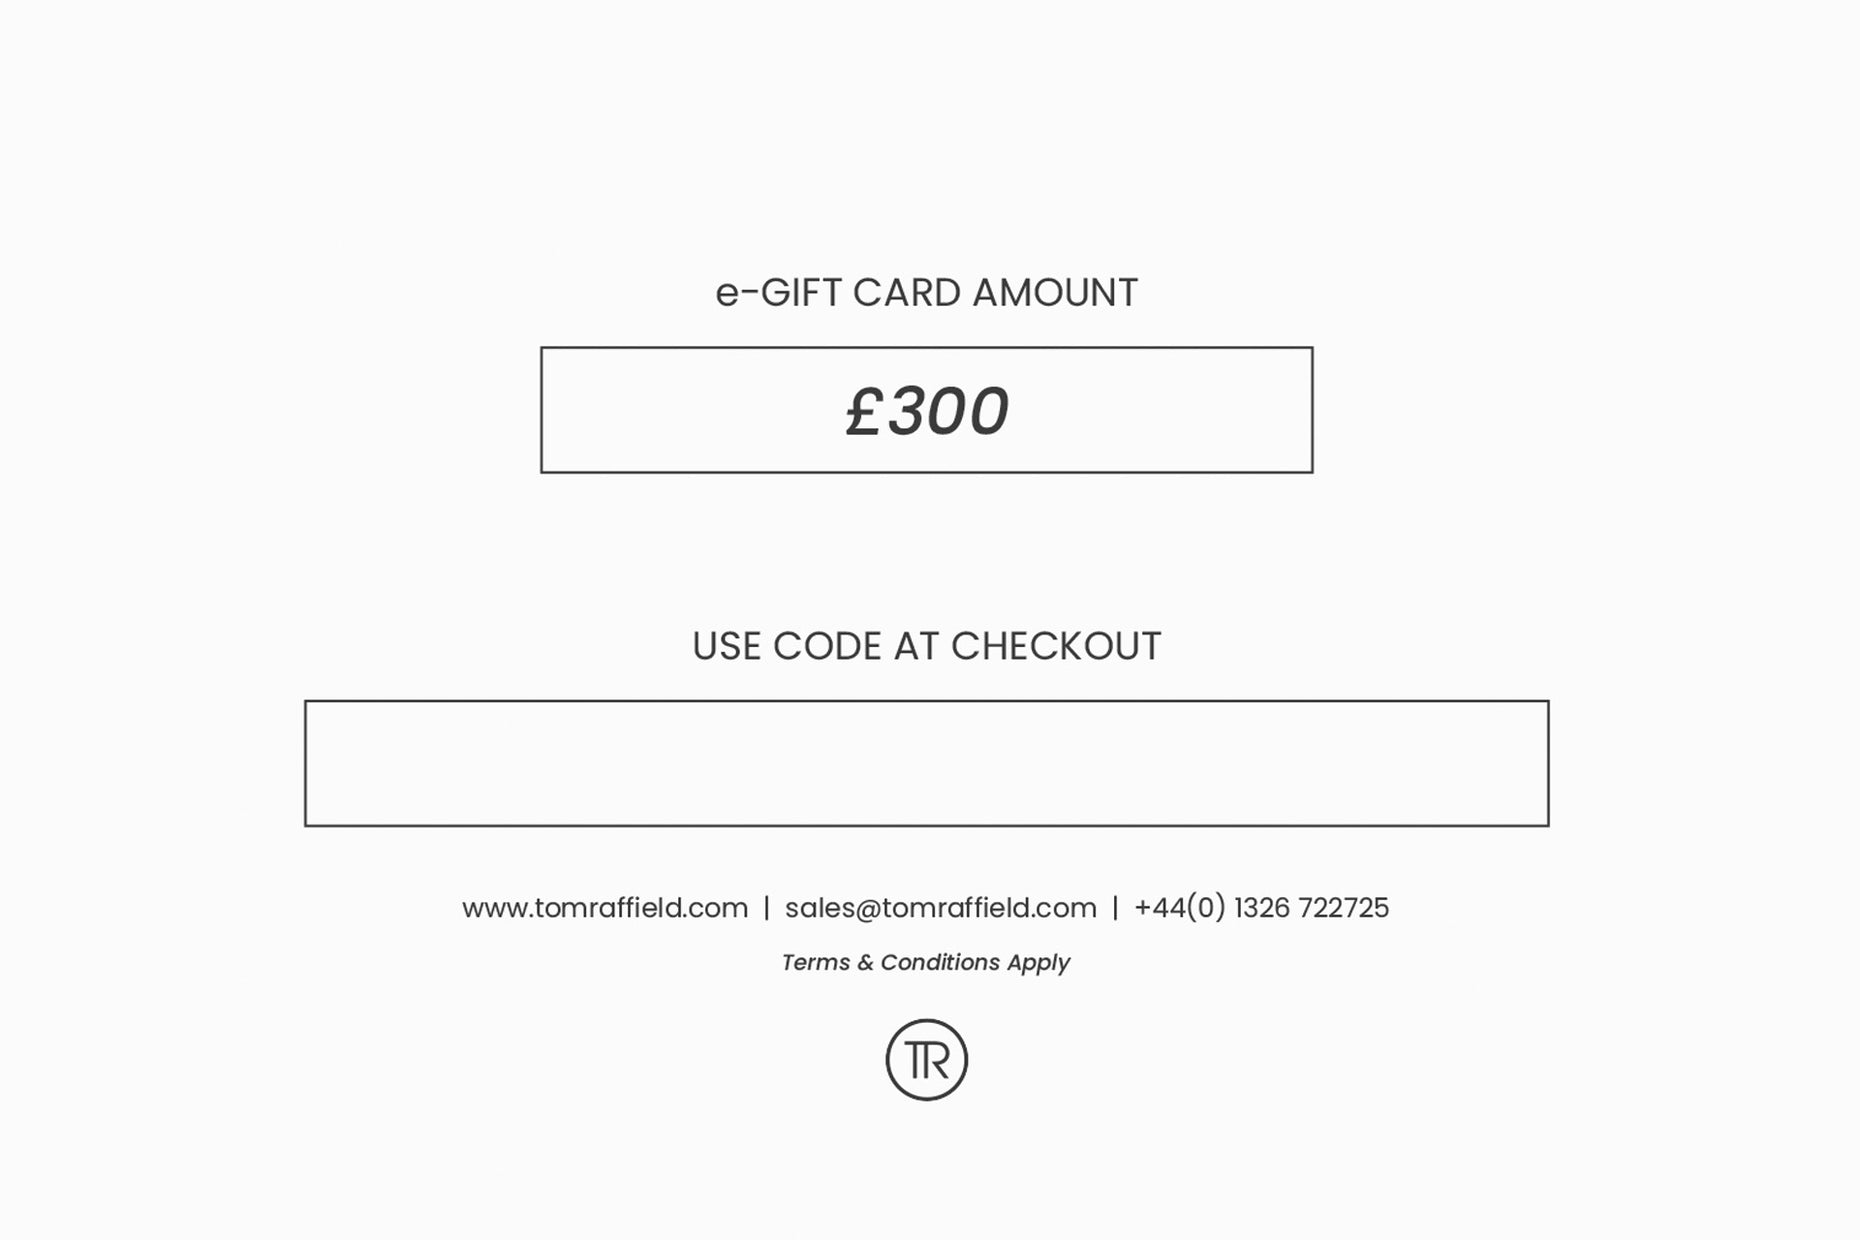 E-Gift Card / £300